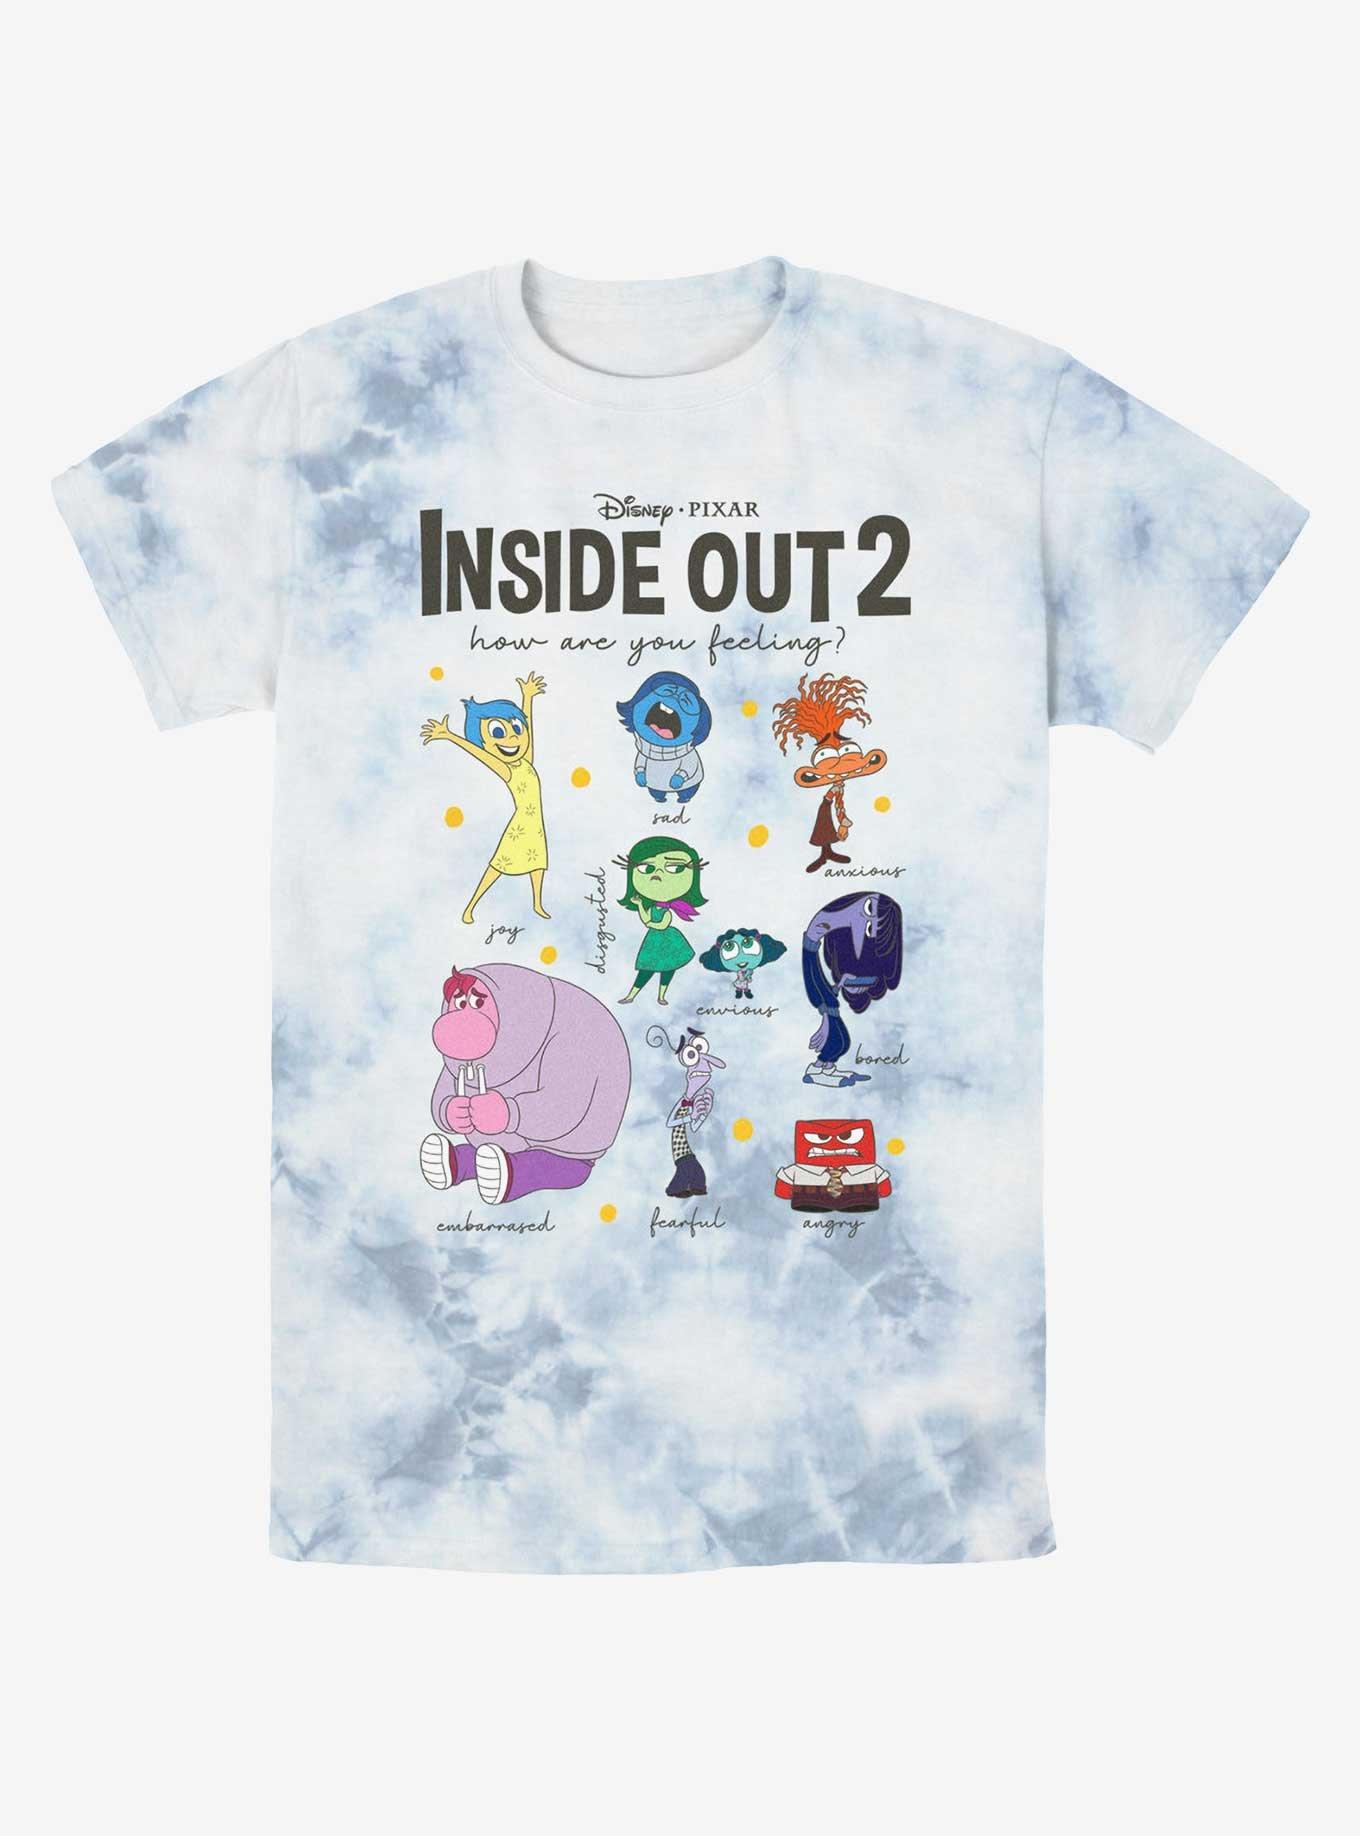 Disney Pixar Inside Out 2 Textbook Of Emotions Tie-Dye T-Shirt